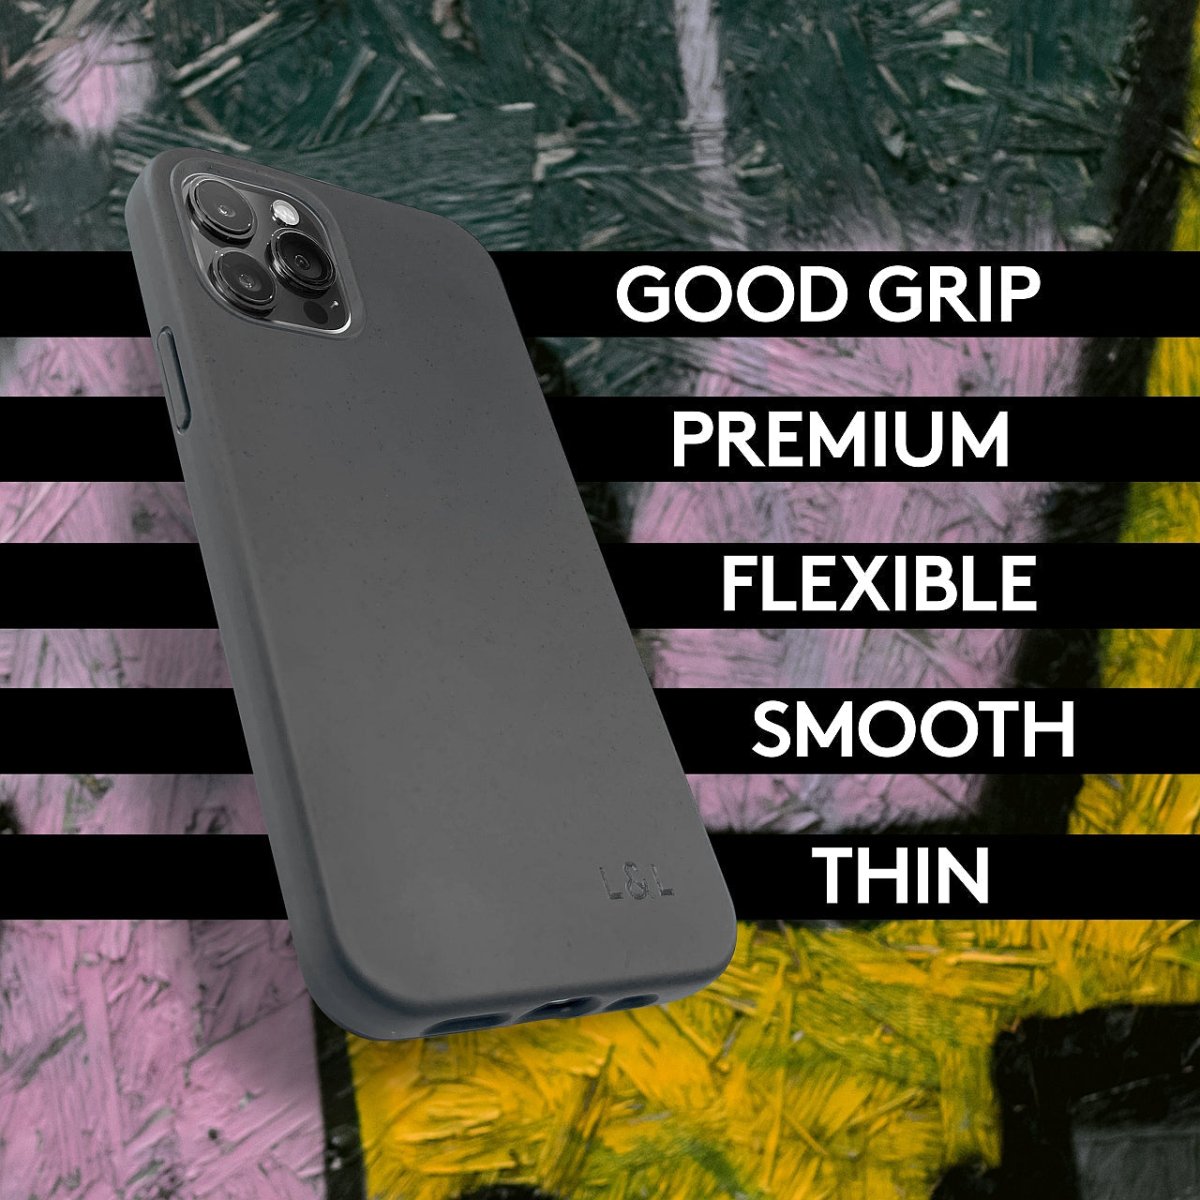 Biodegradable iPhone 14 Pro Max Case - Black - Loam & Lore